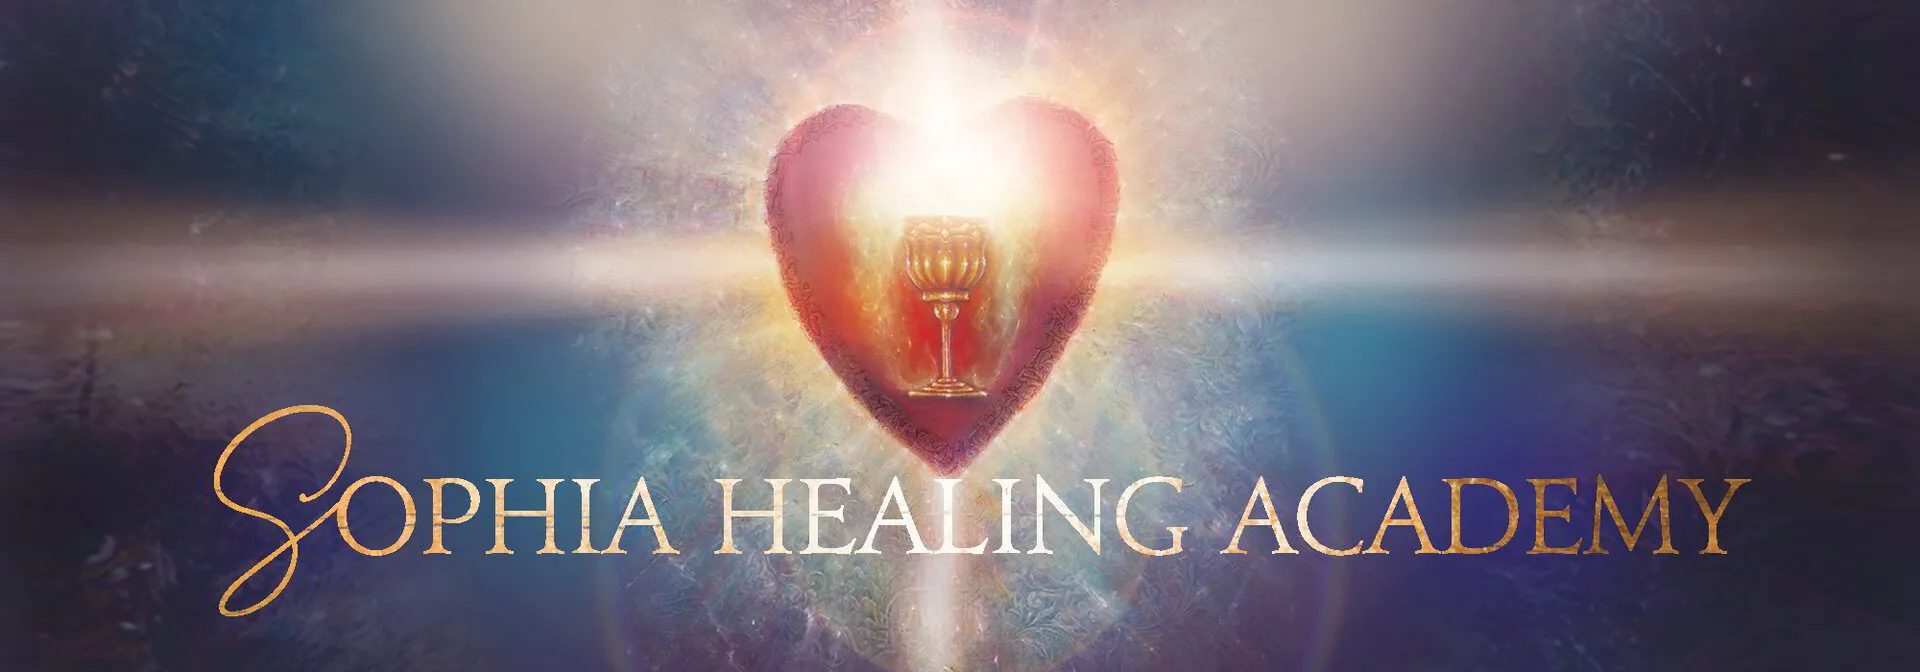 Sophia Healing Academy Banner